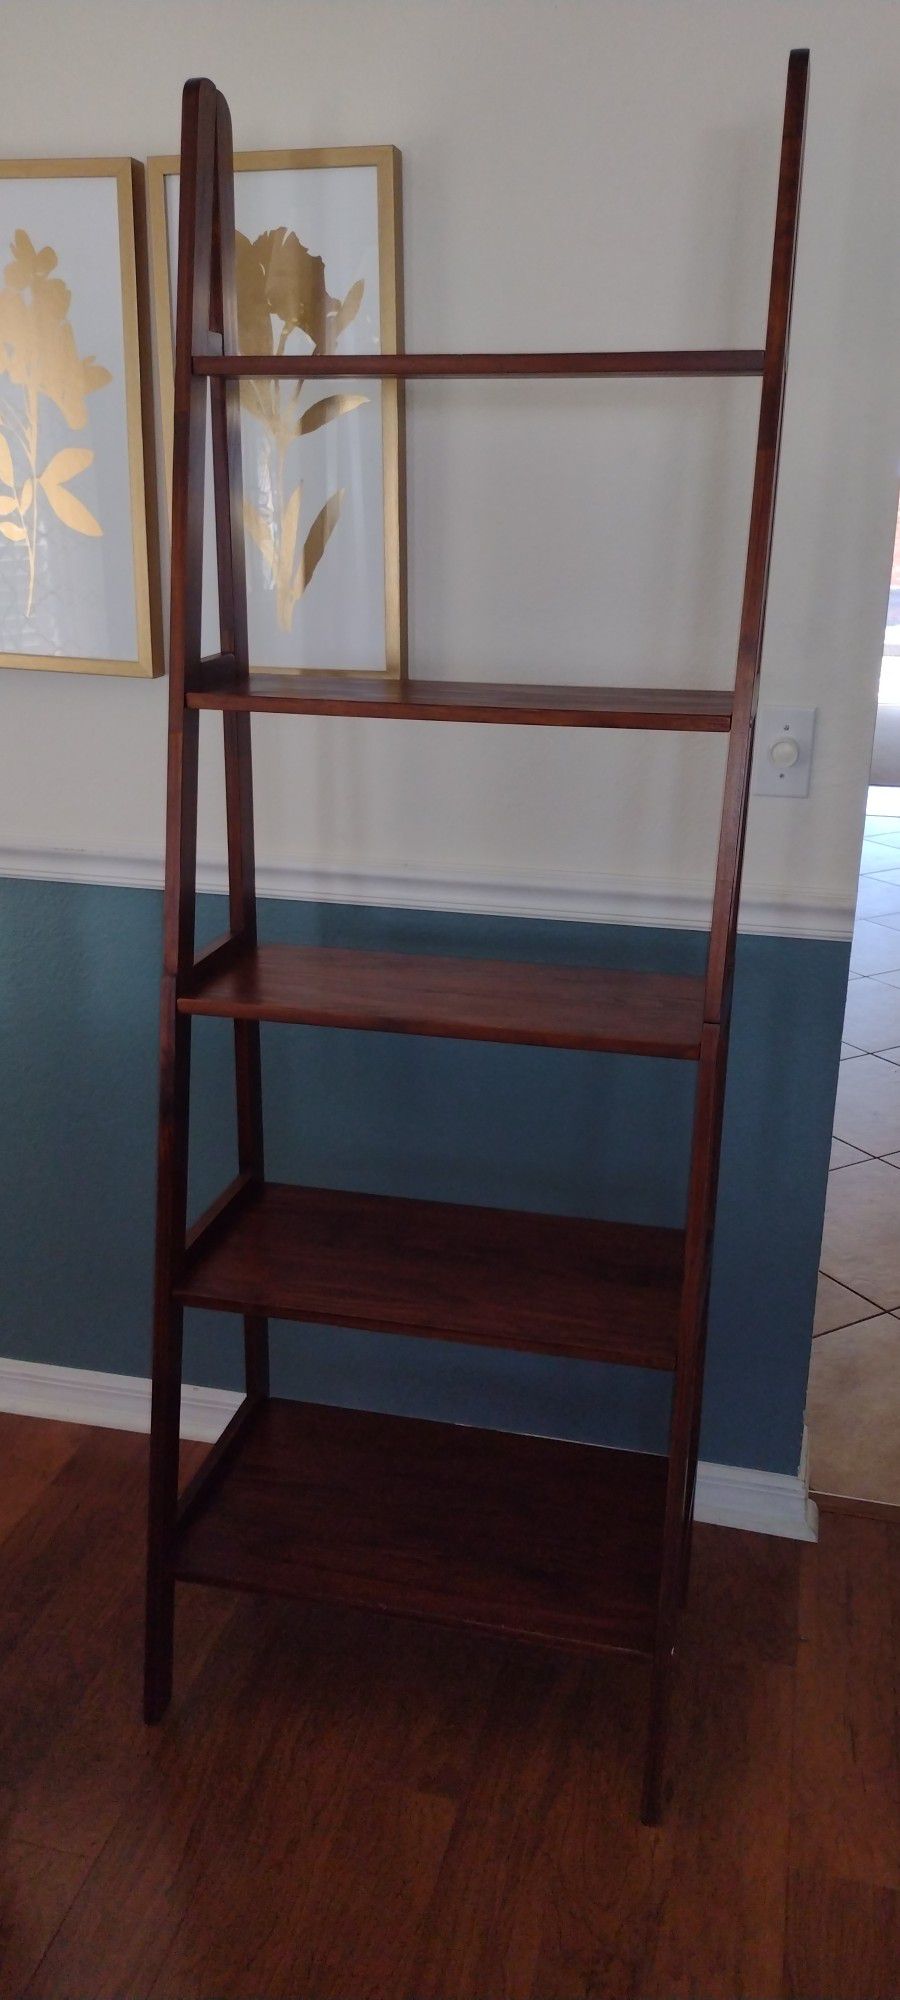 5 Shelf Ladder Bookcase 